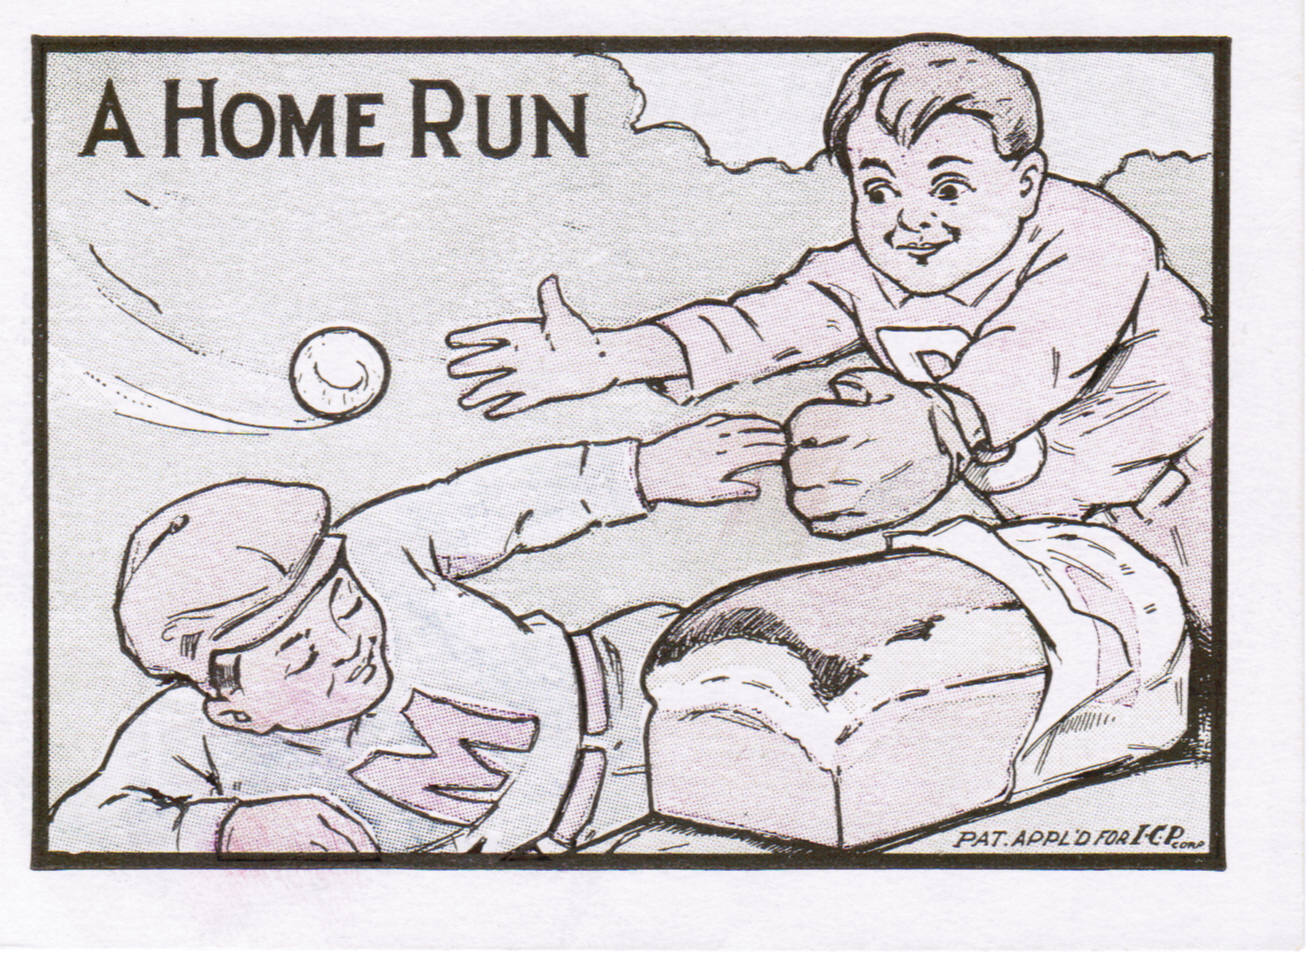 Baseball Advertising Insert Card for Betsy Ross Bread (Front)